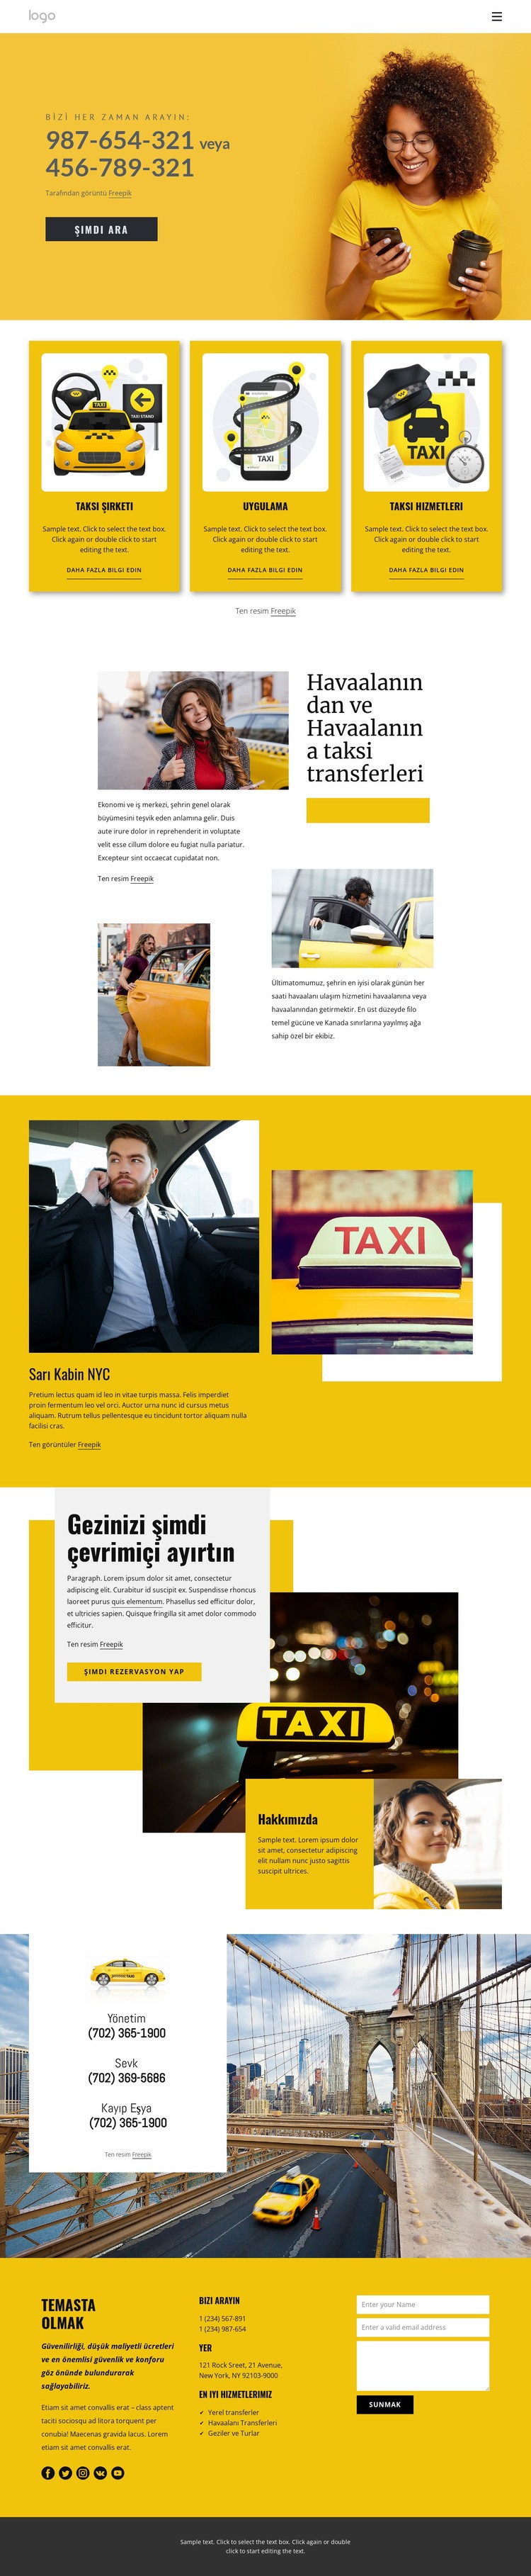 Kaliteli taksi hizmeti HTML5 Şablonu